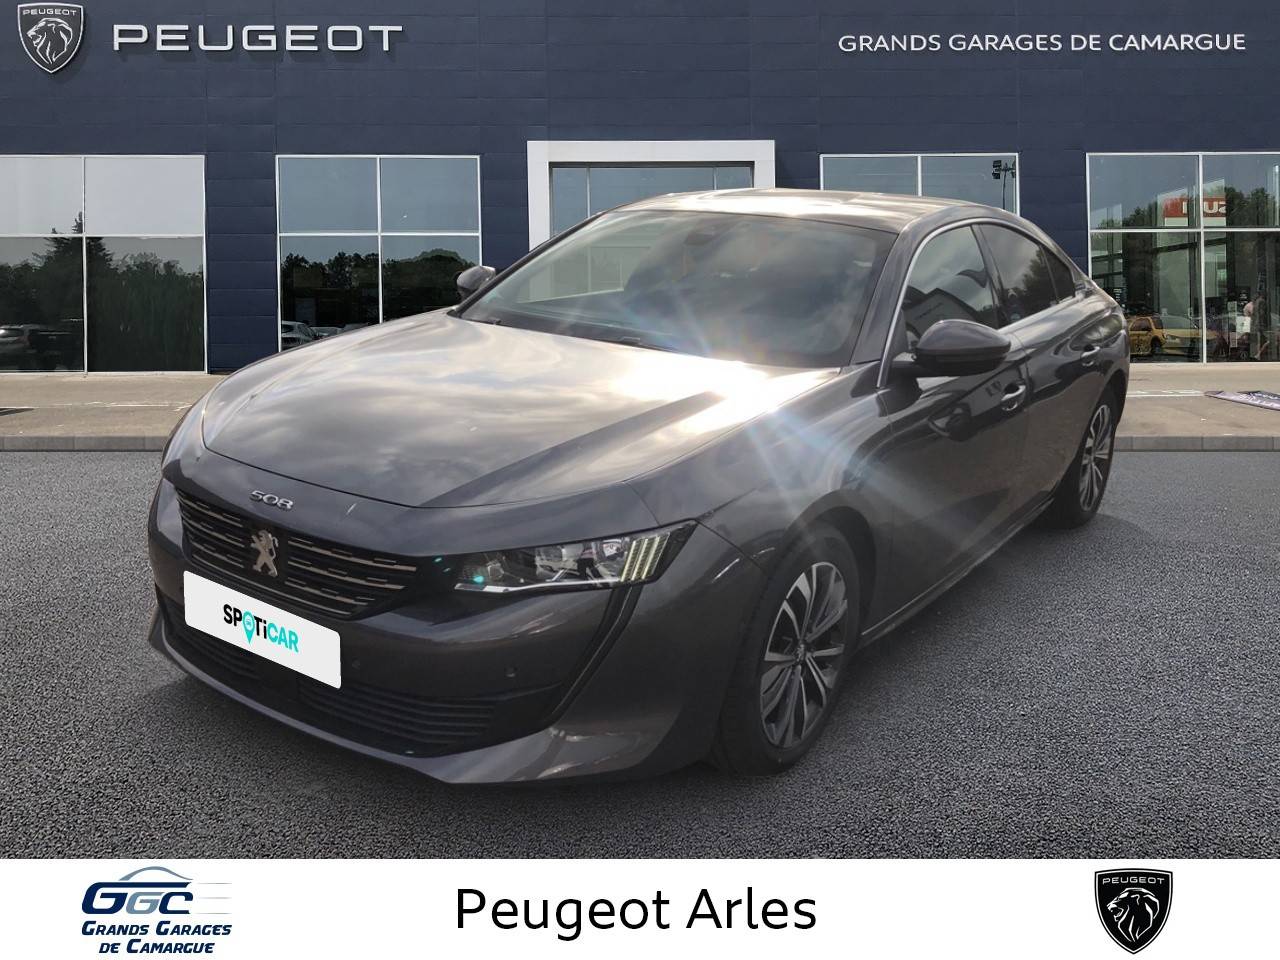 PEUGEOT 508 | 508 BlueHDi 130 ch S&S EAT8 occasion - Peugeot Arles